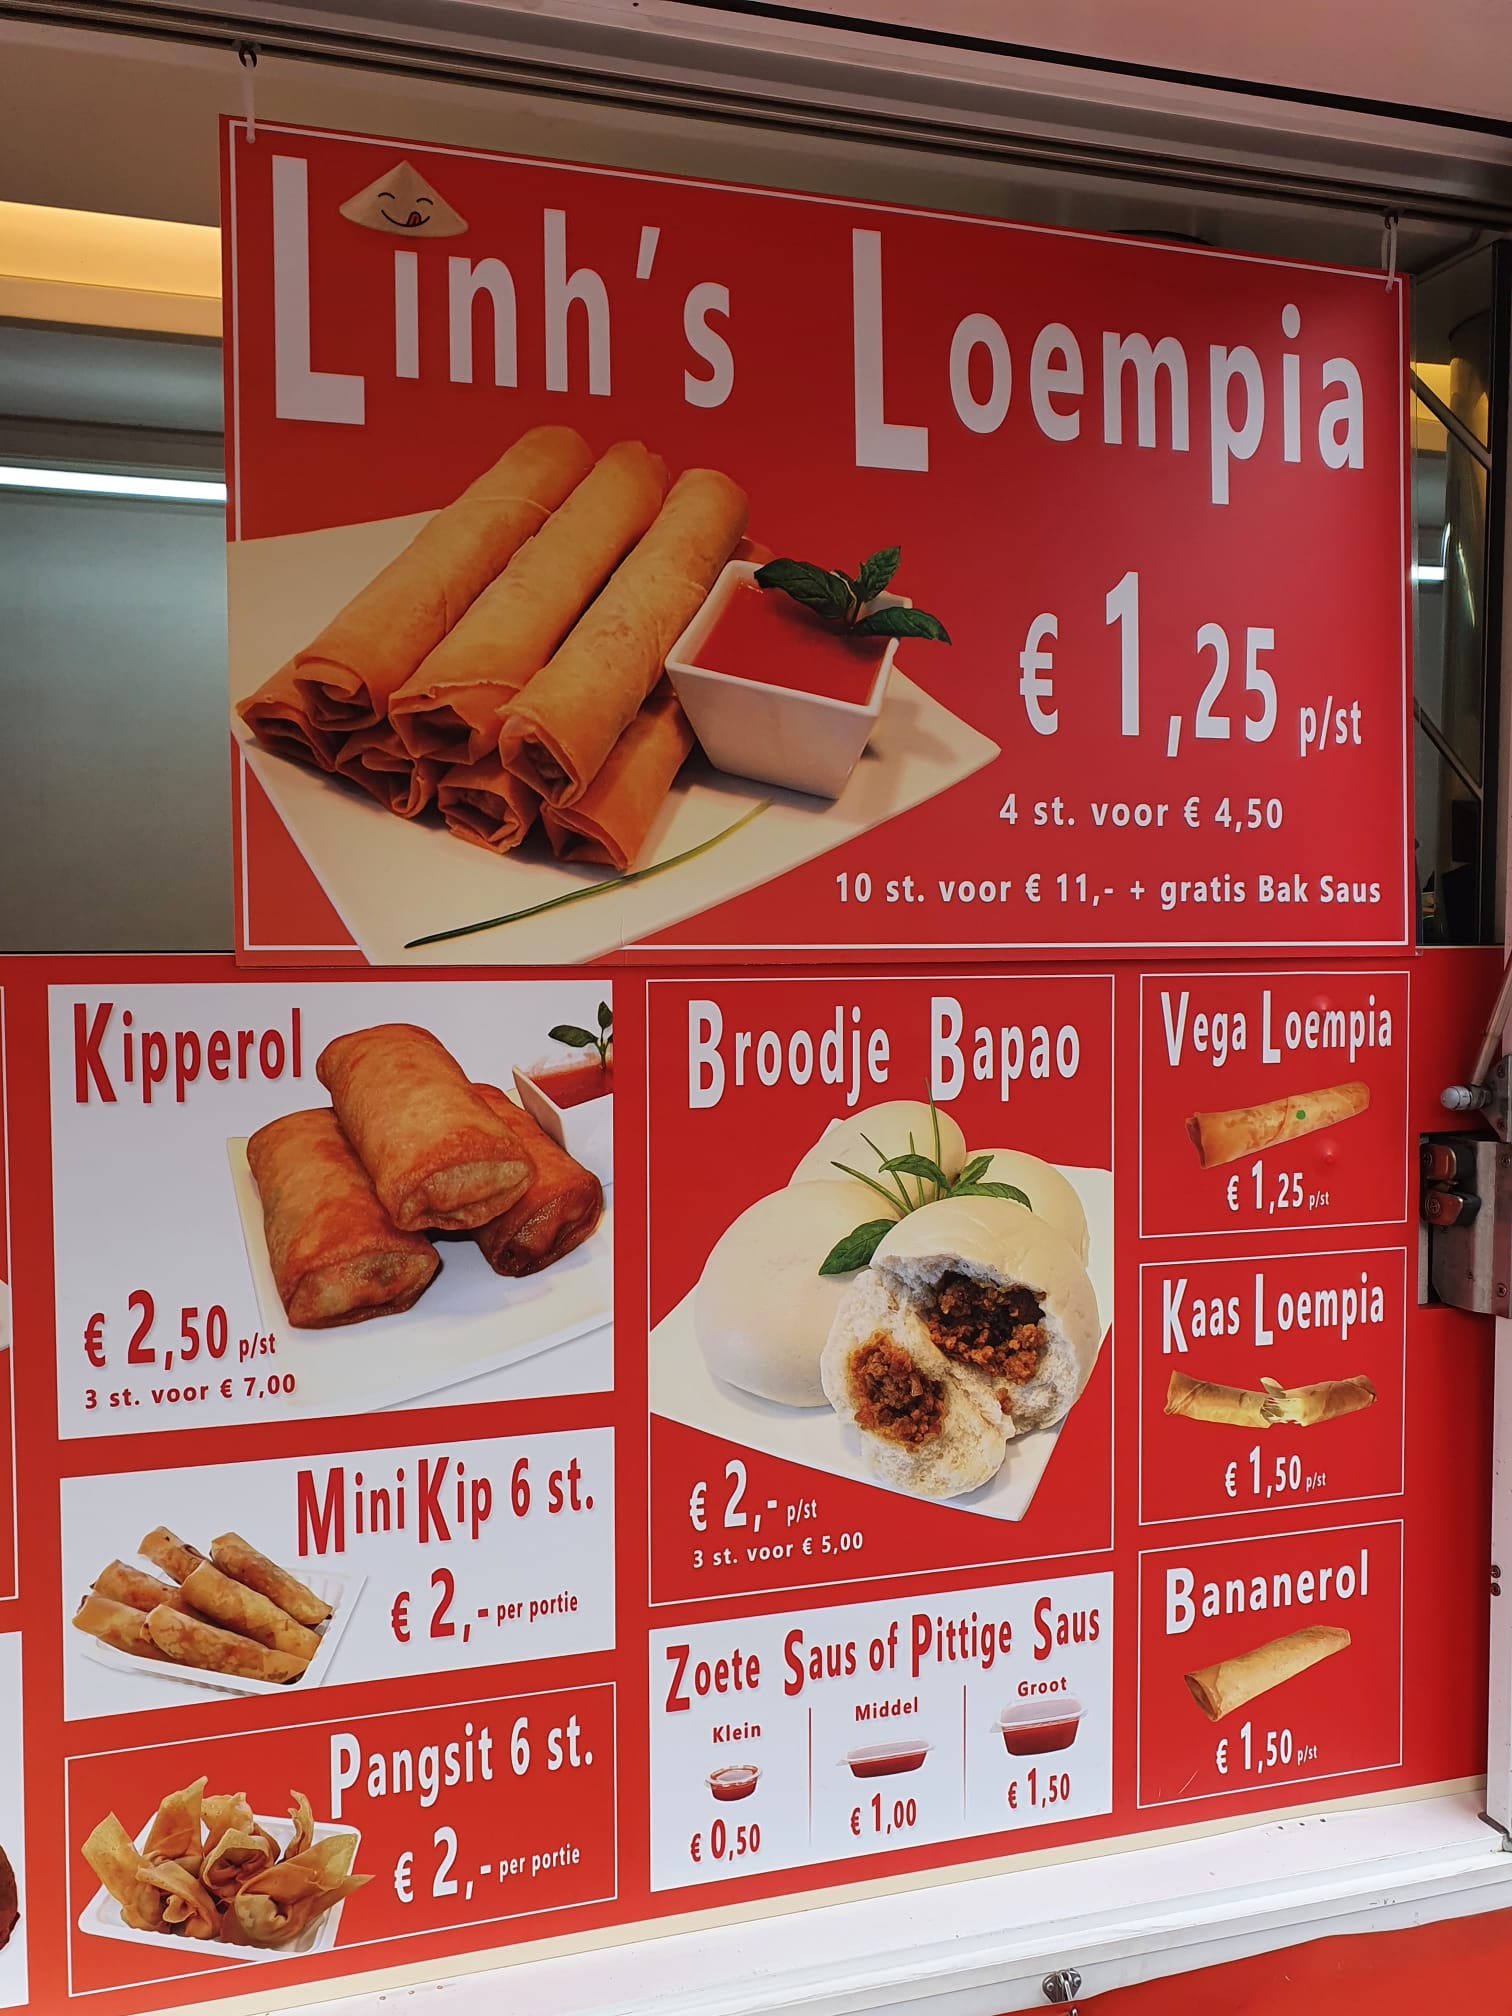 Linh's Loempia